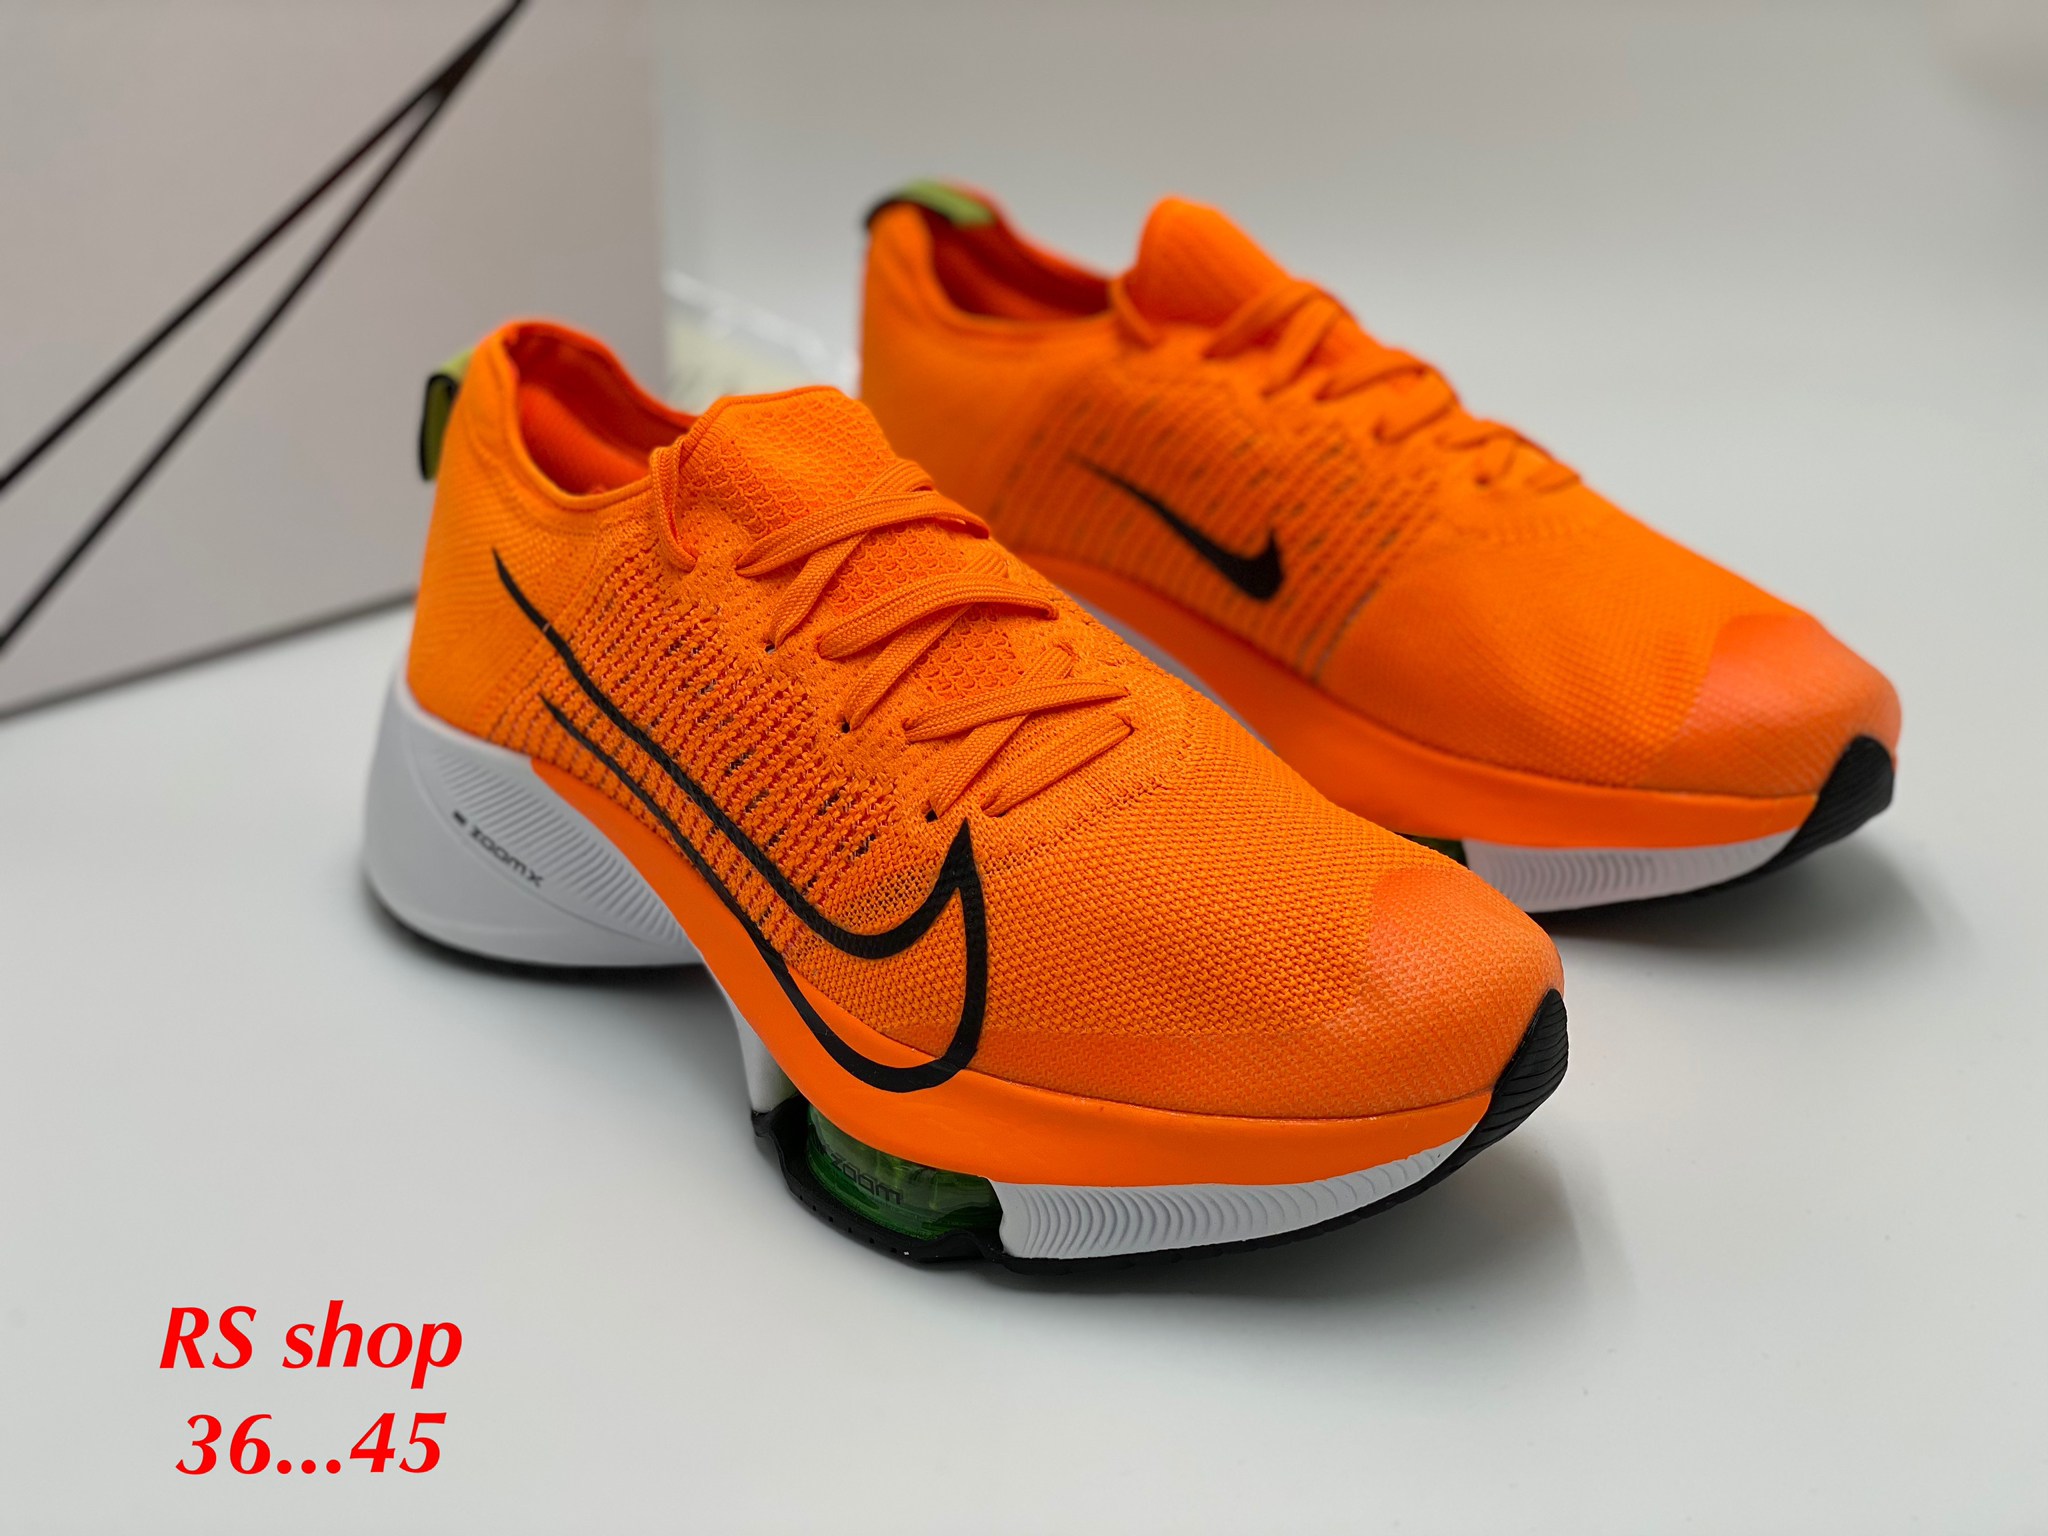 [Sports BKK] รองเท้าวิ่งผู้หญิงNike Air Zoom Tempo NEXT% "สีชมพู/สีขาว" size:36-40 (พร้อมกล่อง+อุปกรณ์) รองเท้าวิ่ง รองเท้าวิ่งมาราธอน รองเท้ากีฬา